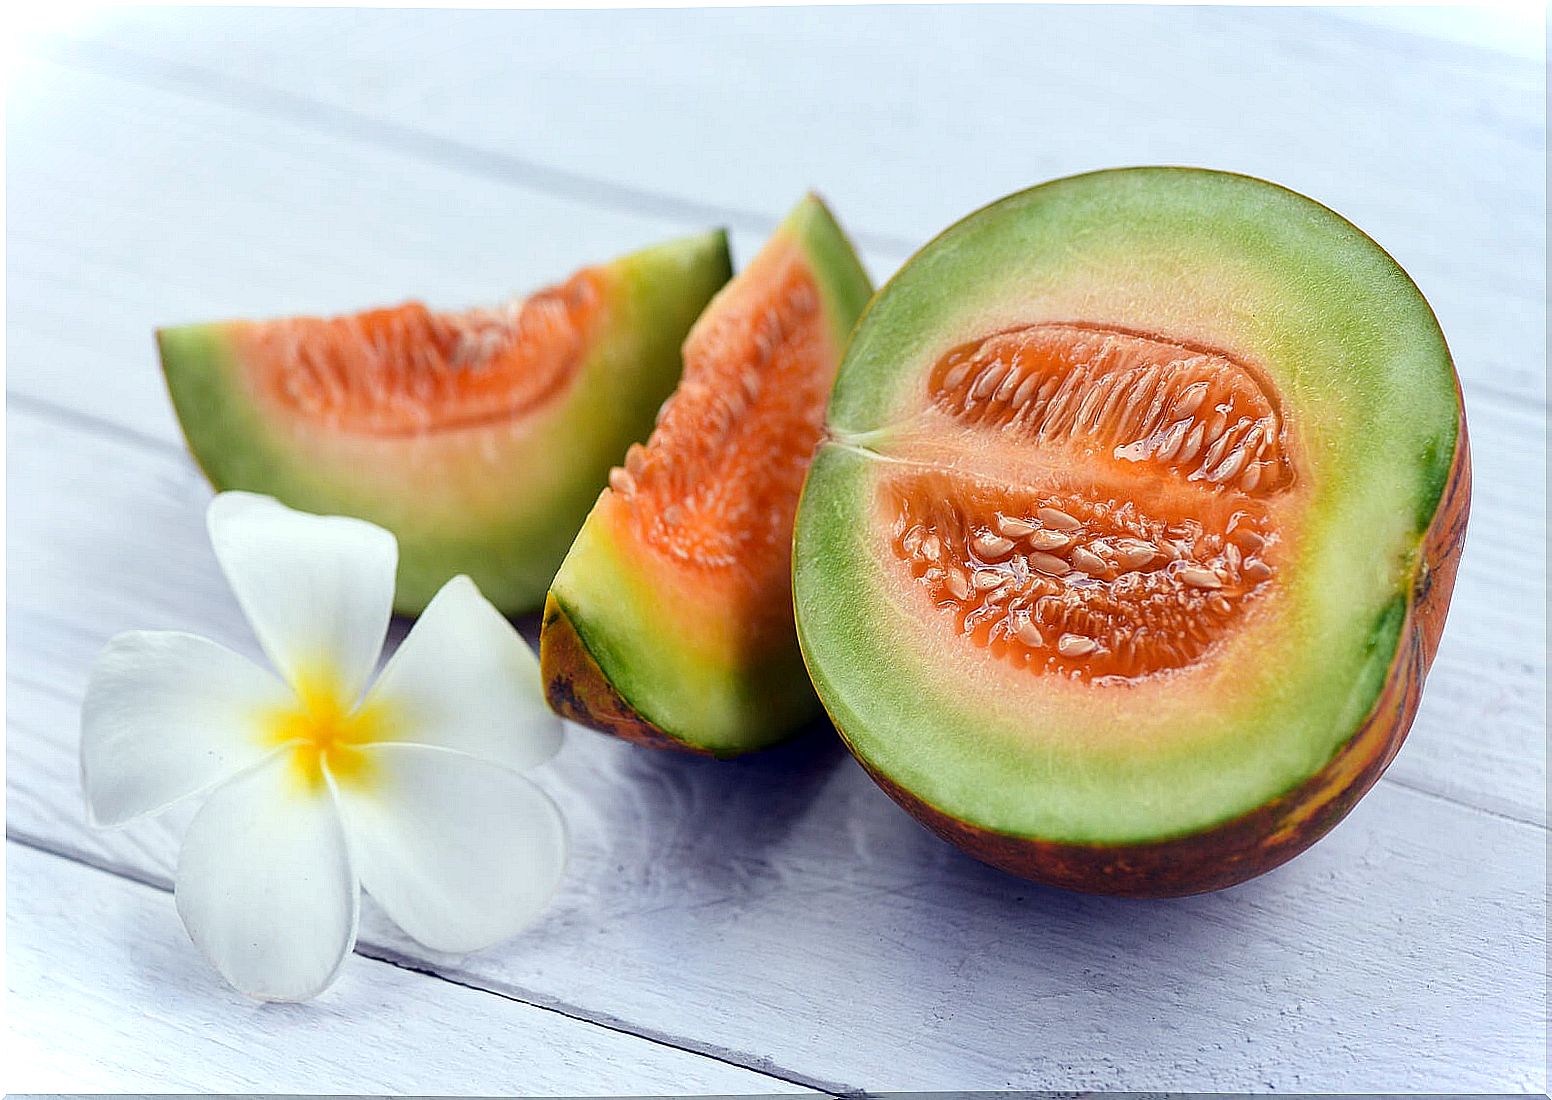 Melon is a fruit rich in water.